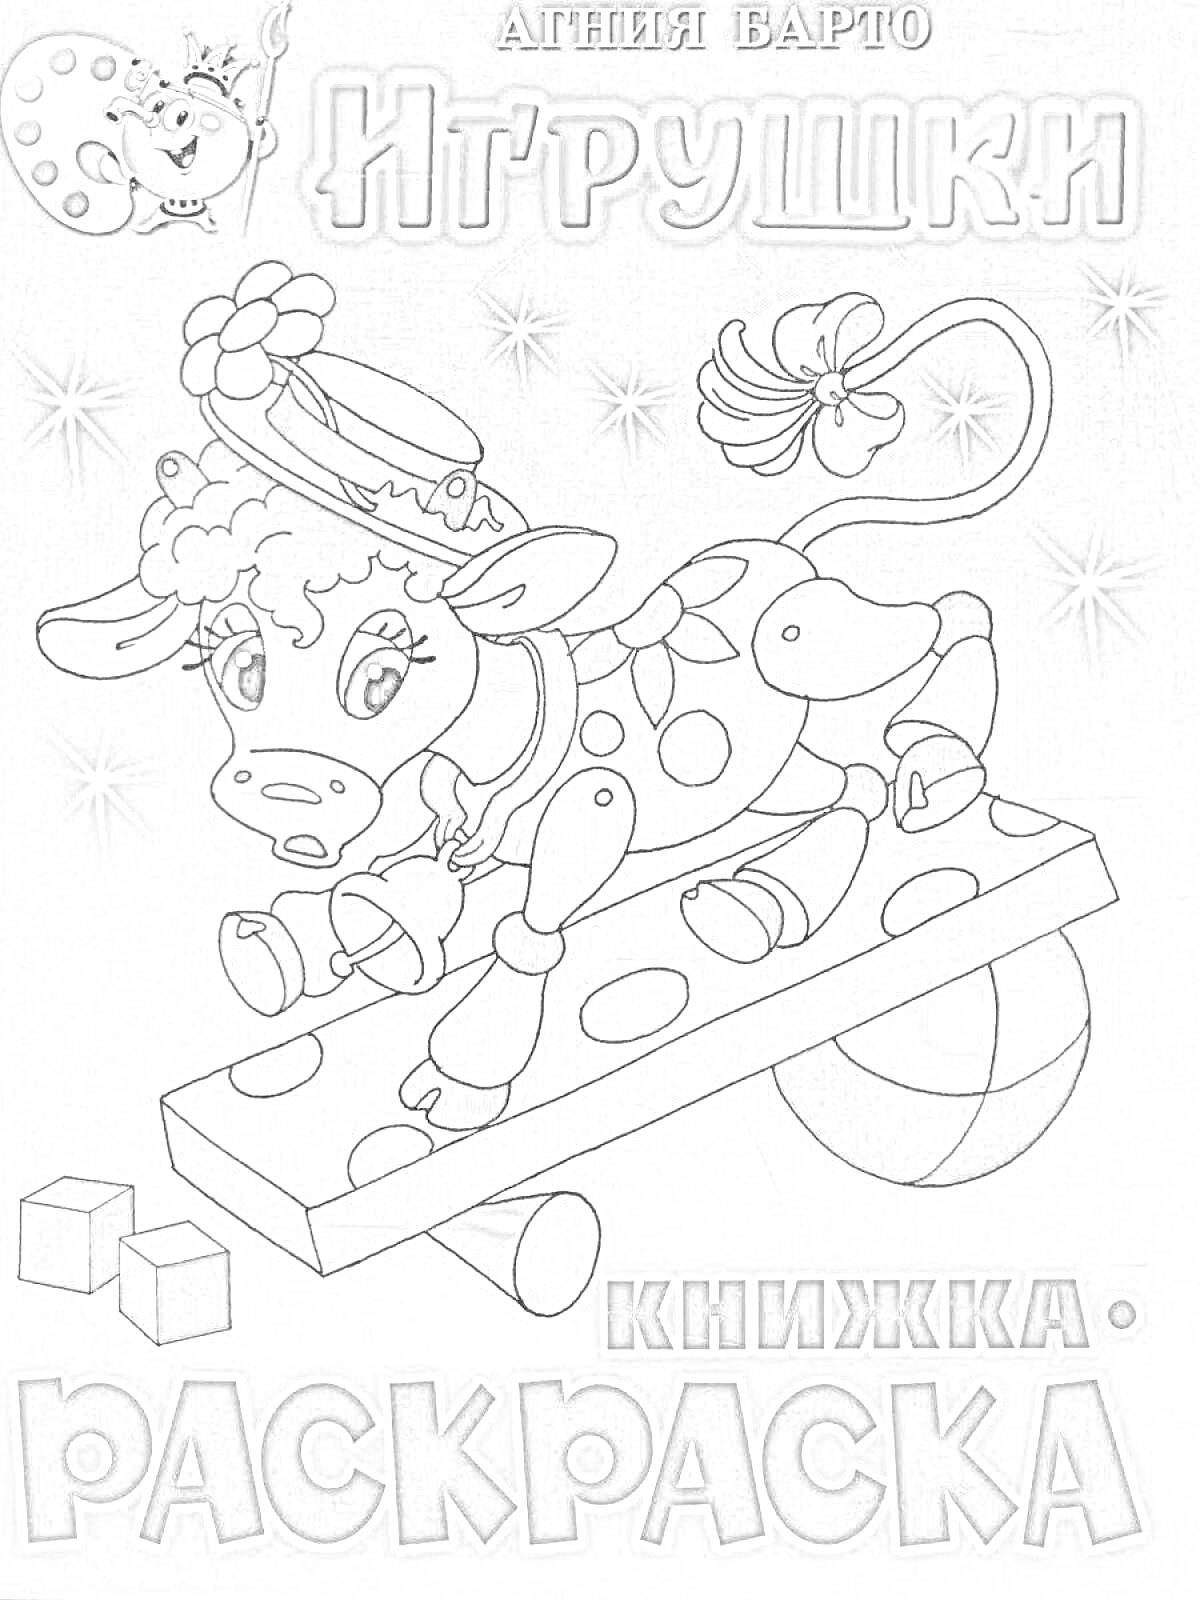 На раскраске изображено: Игрушки, Корова, Качели, Кубики, Цветные карандаши, Мячи